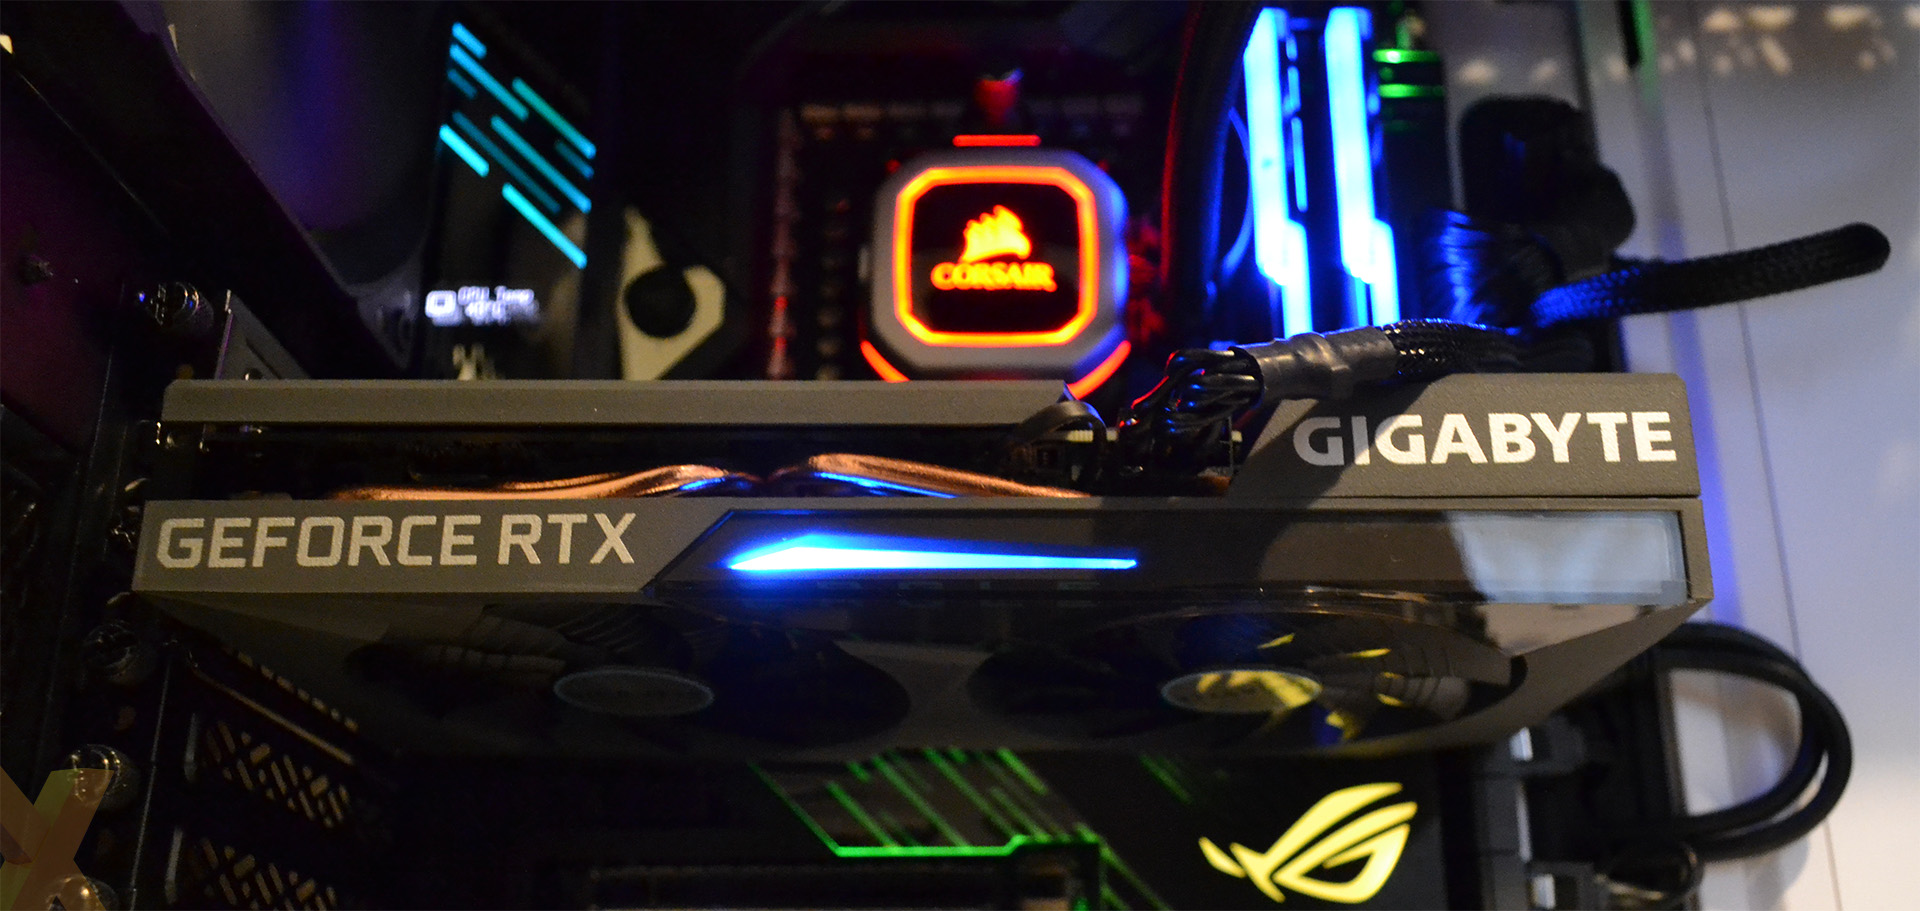 Review: Gigabyte GeForce RTX 3060 Ti Eagle OC - Graphics - HEXUS.net